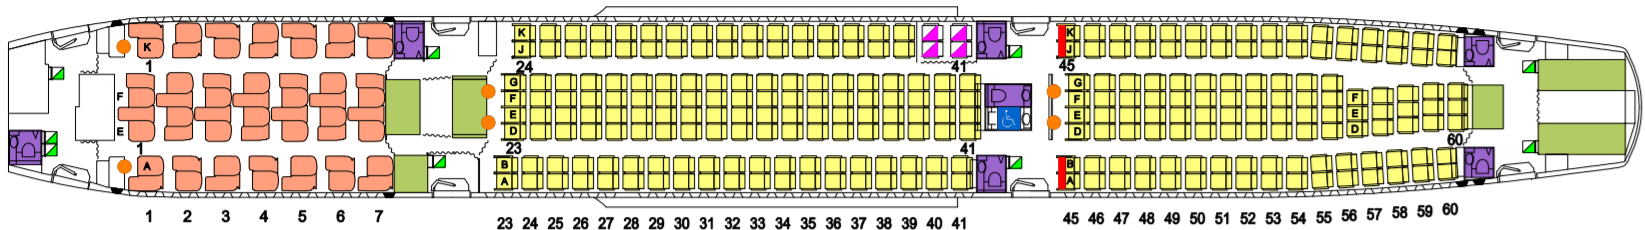 Qantas A330-300 Seat Map